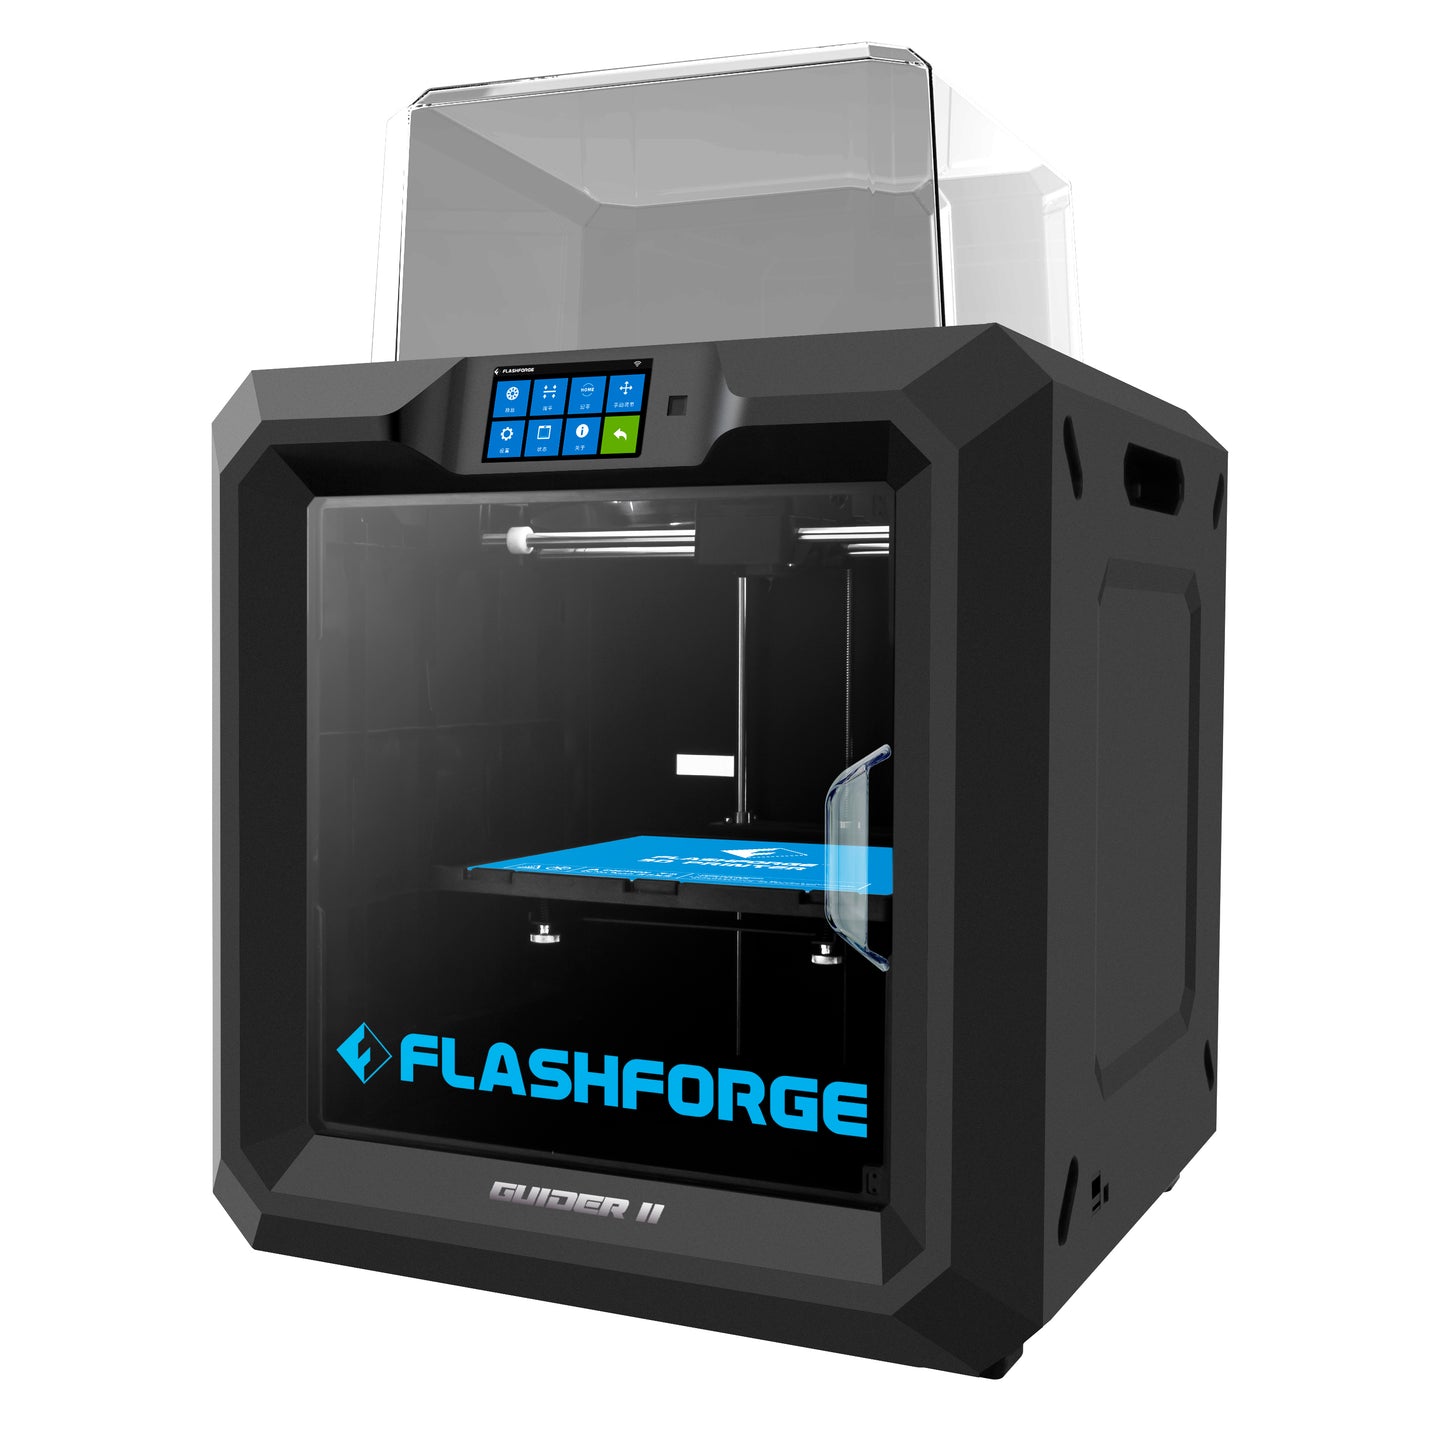 FLASHFORGE GUIDER II 3D PRINTER - 3D Printers Depot